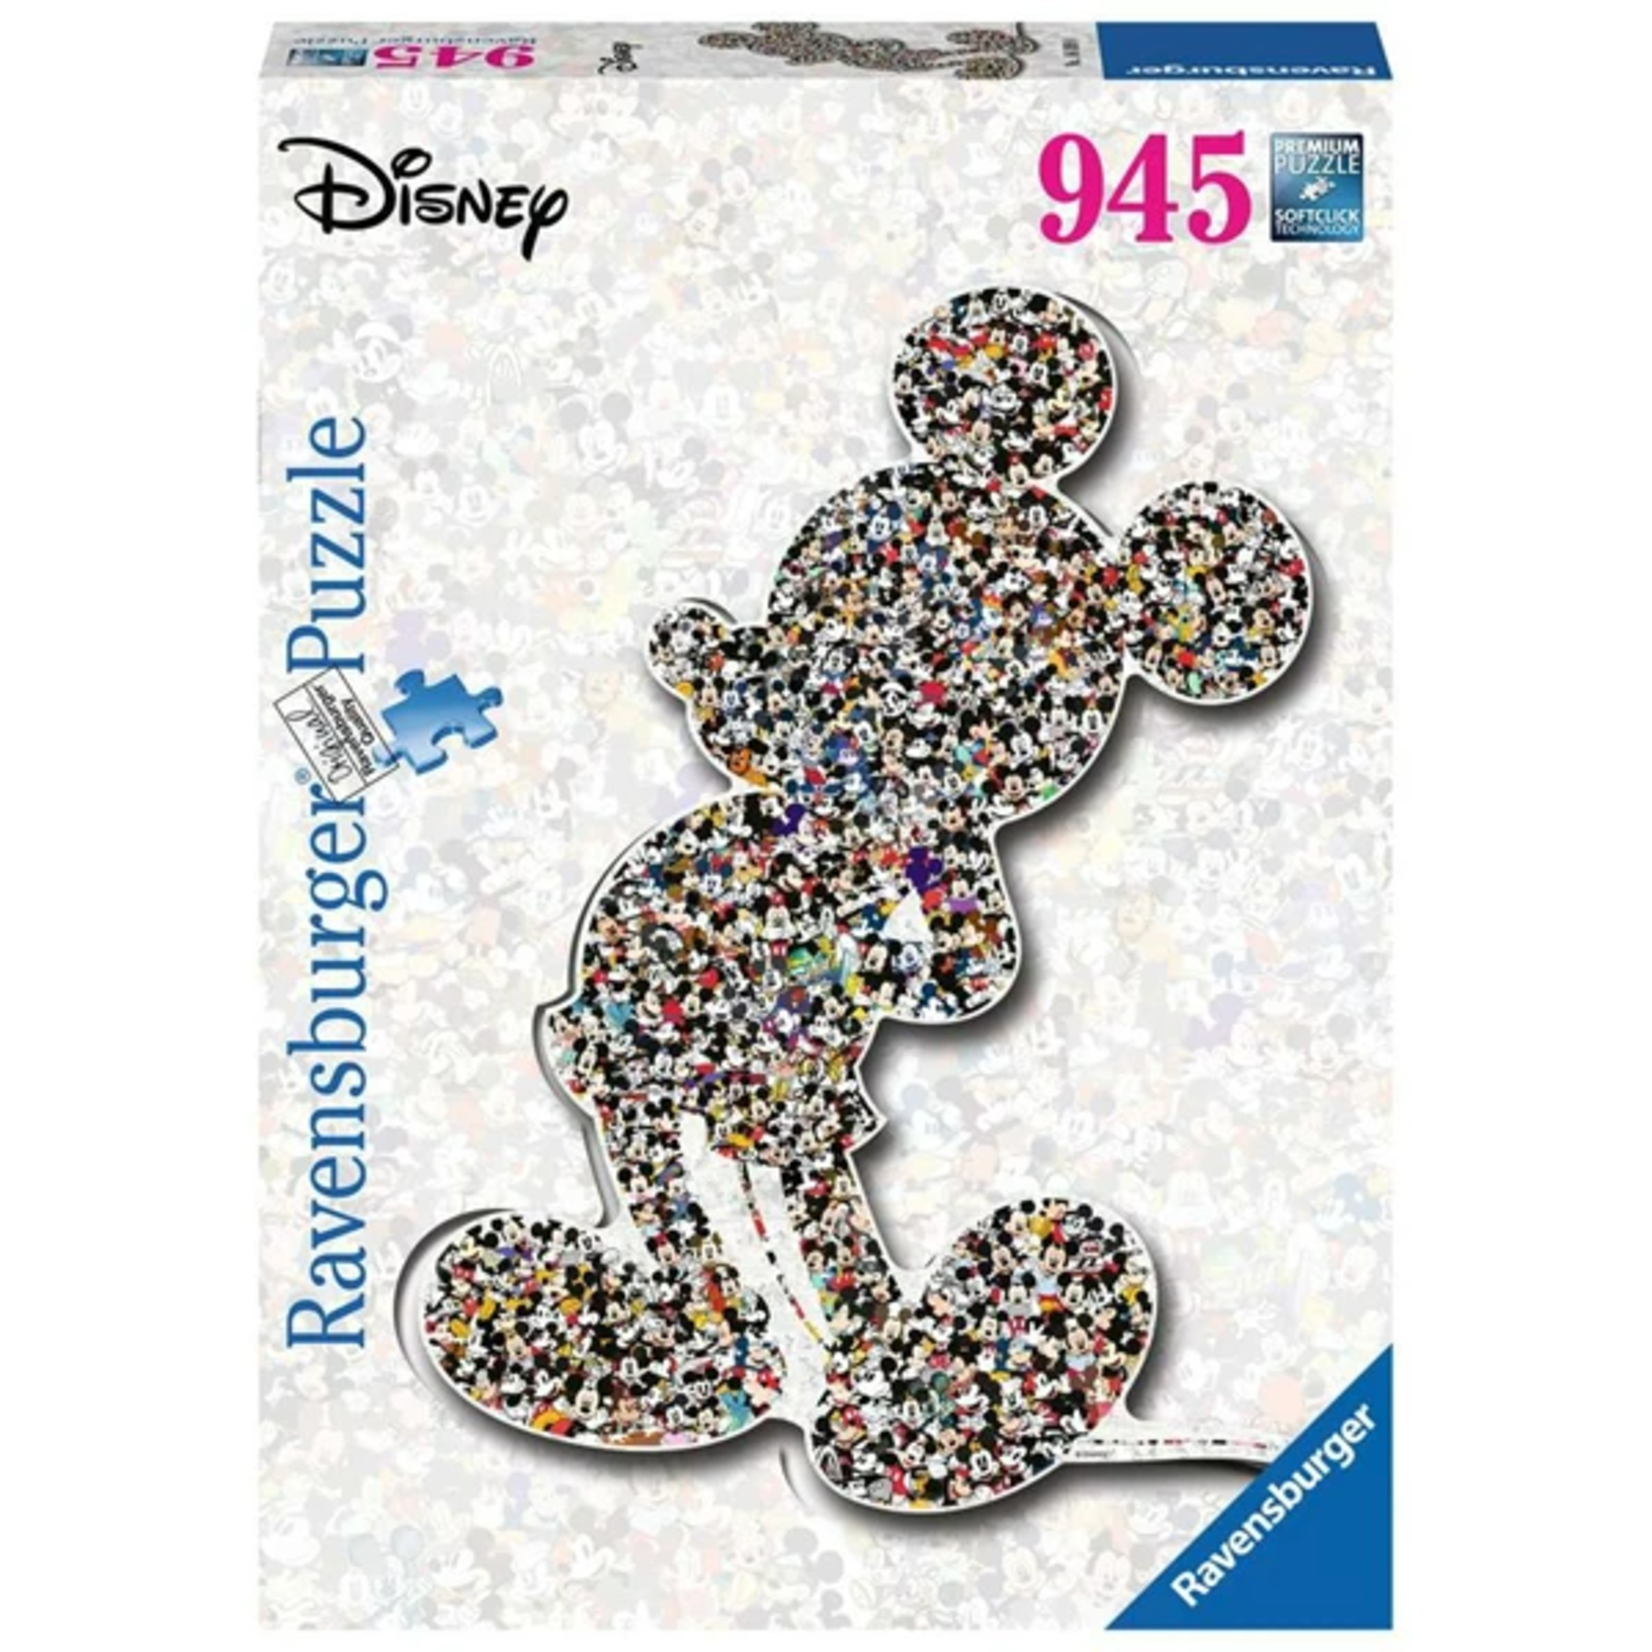 Ravensburger 945 pc Puzzle Shaped Mickey